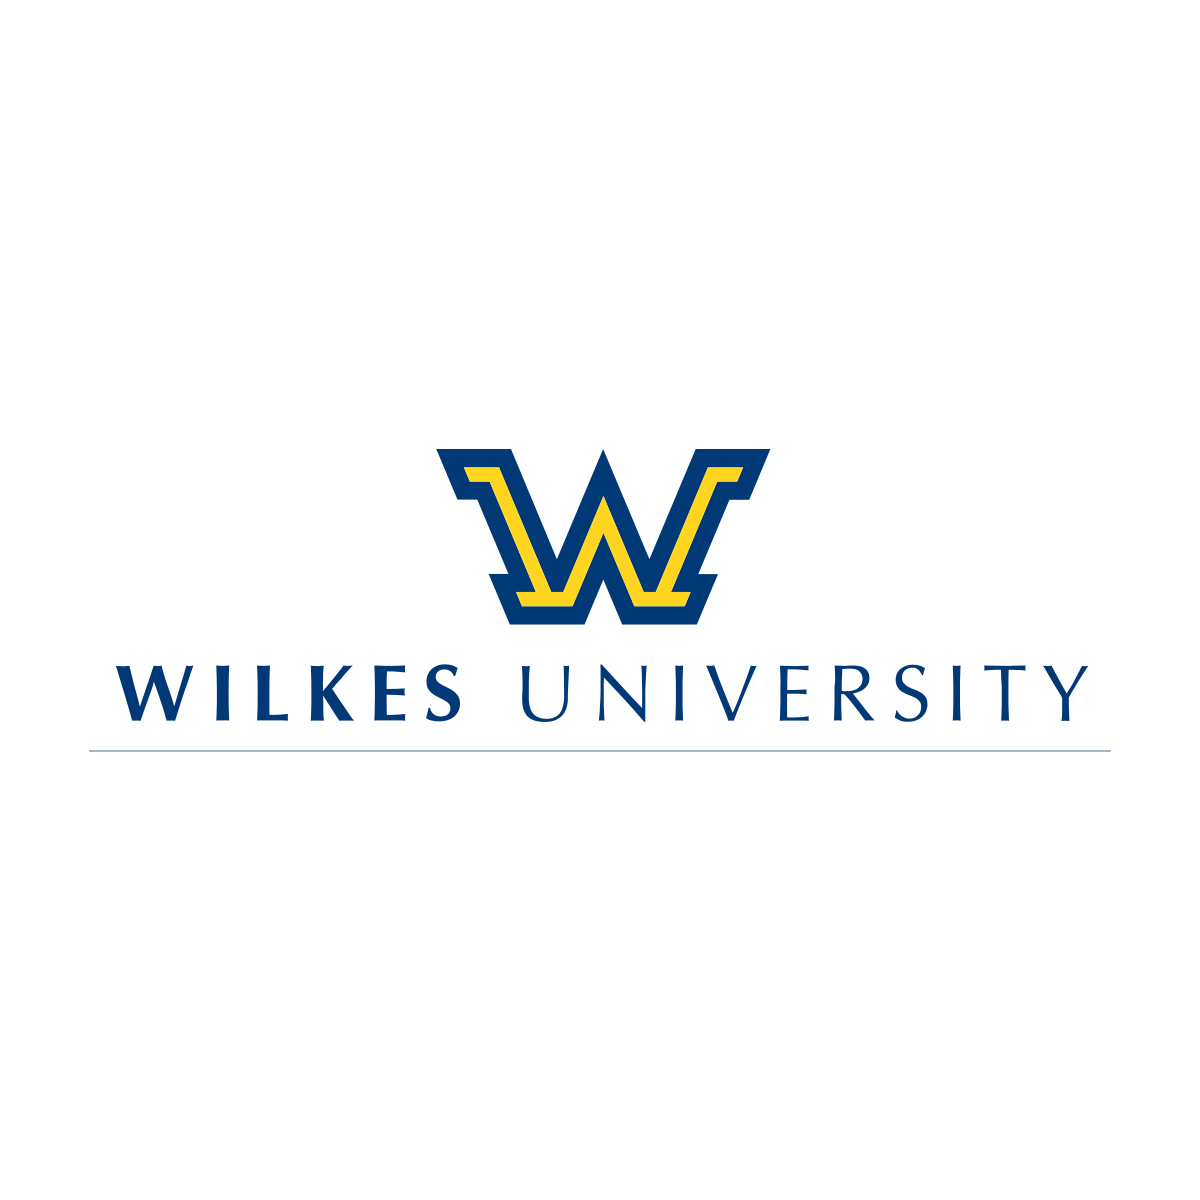 Wilkes University International Student Services Association